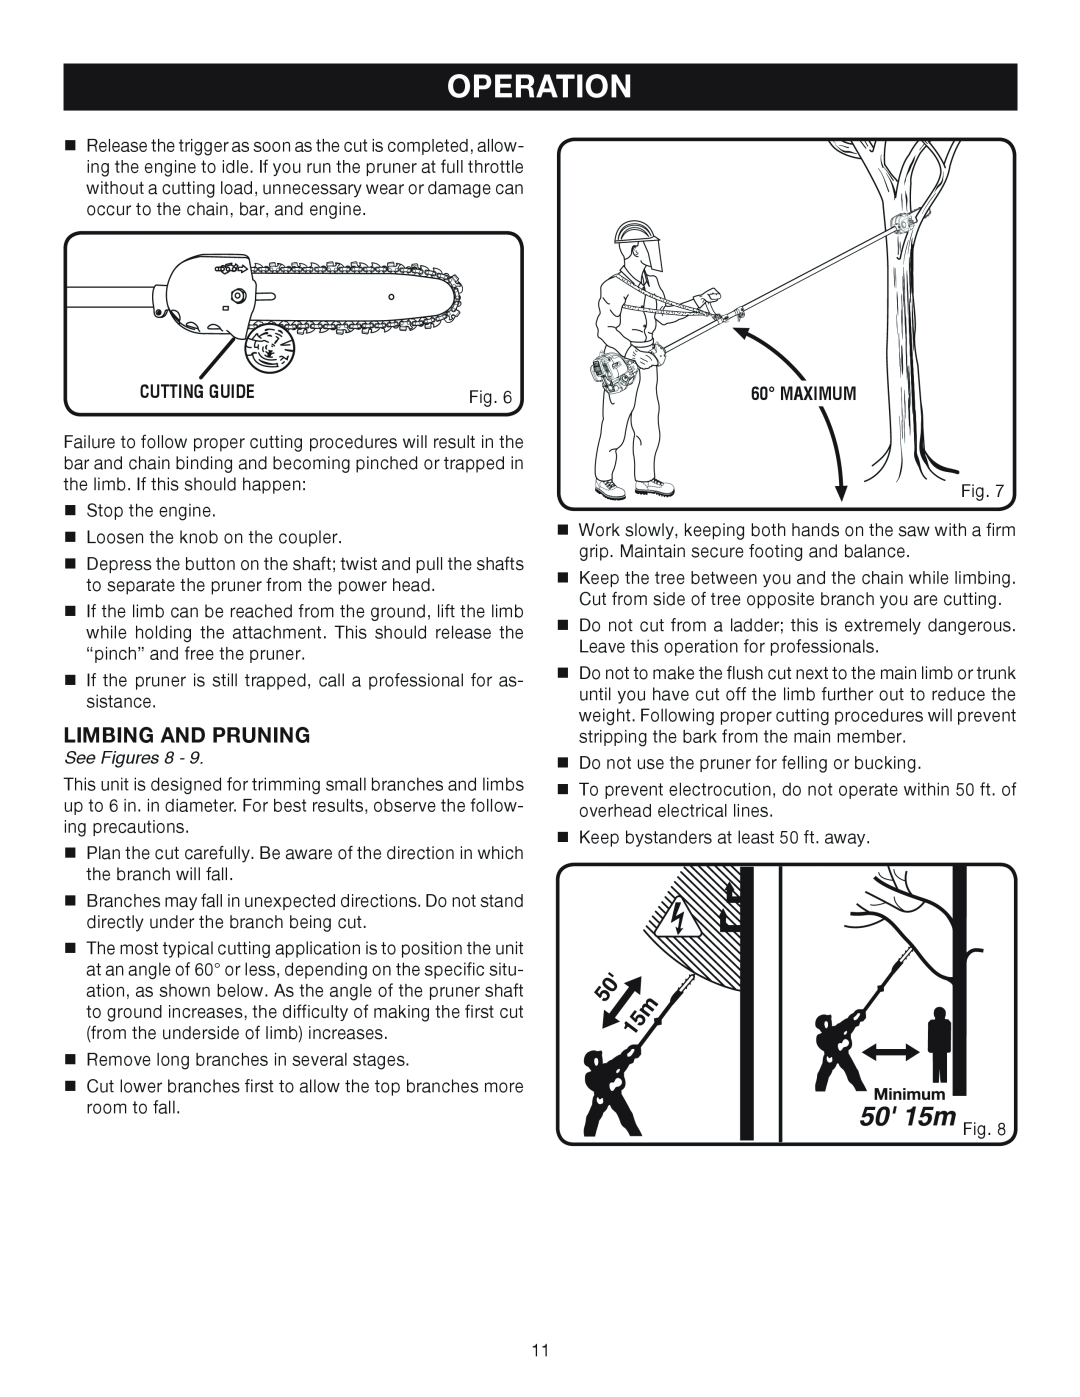 Ryobi RY52003 manual Limbing And Pruning, Operation, Cutting Guide, See Figures, Maximum 